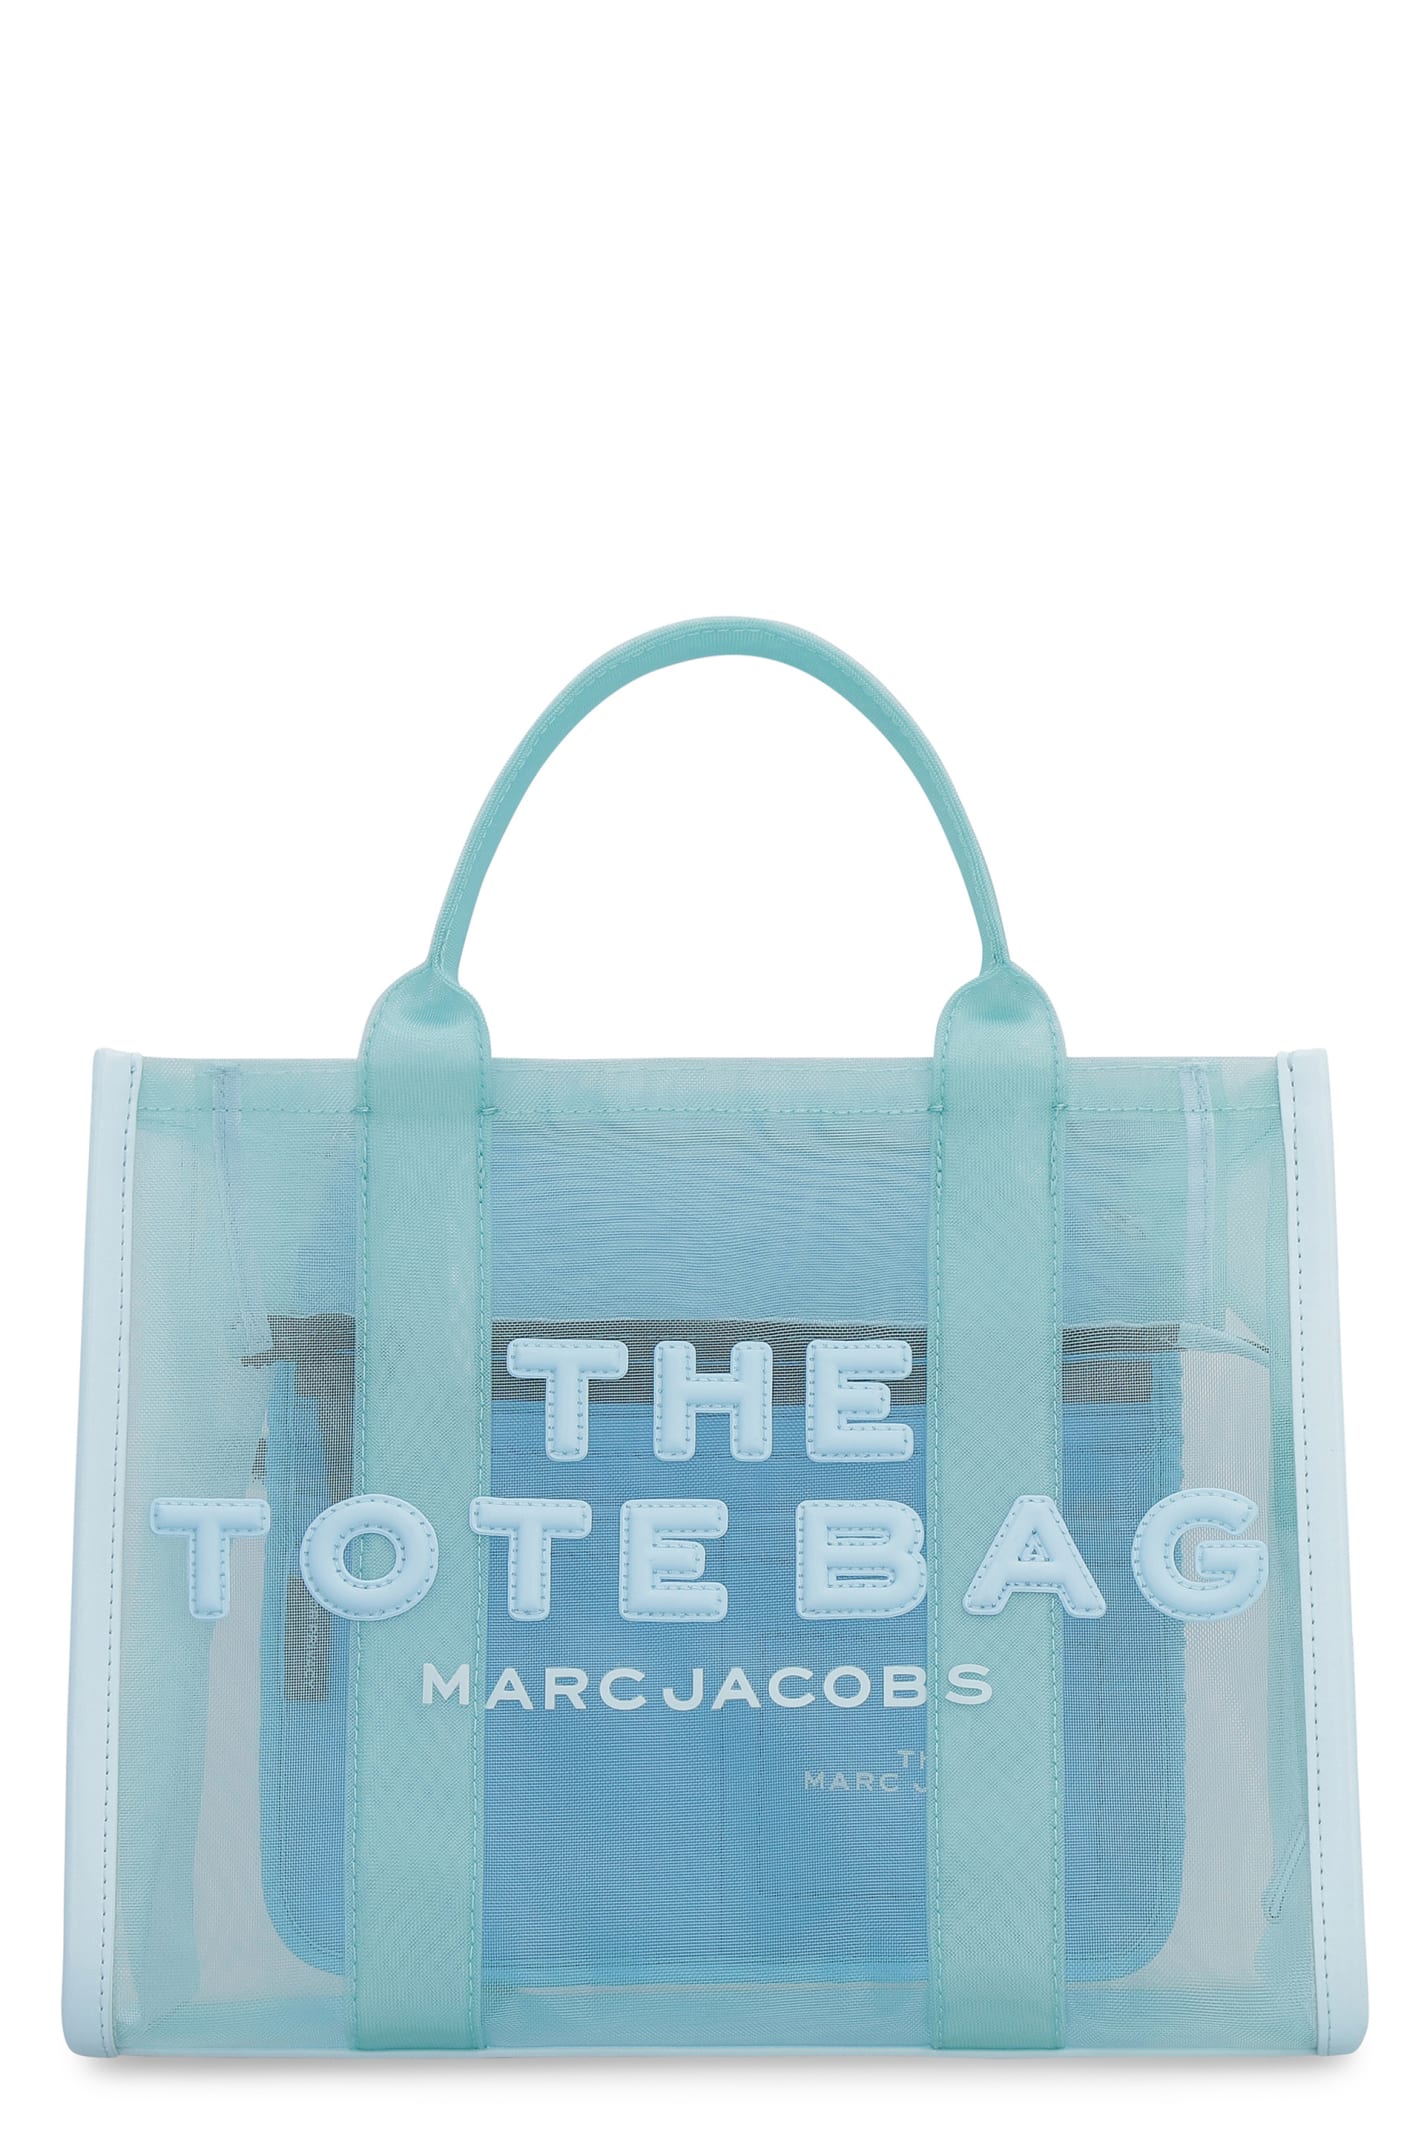 Marc Jacobs Logo Detail Tote Bag